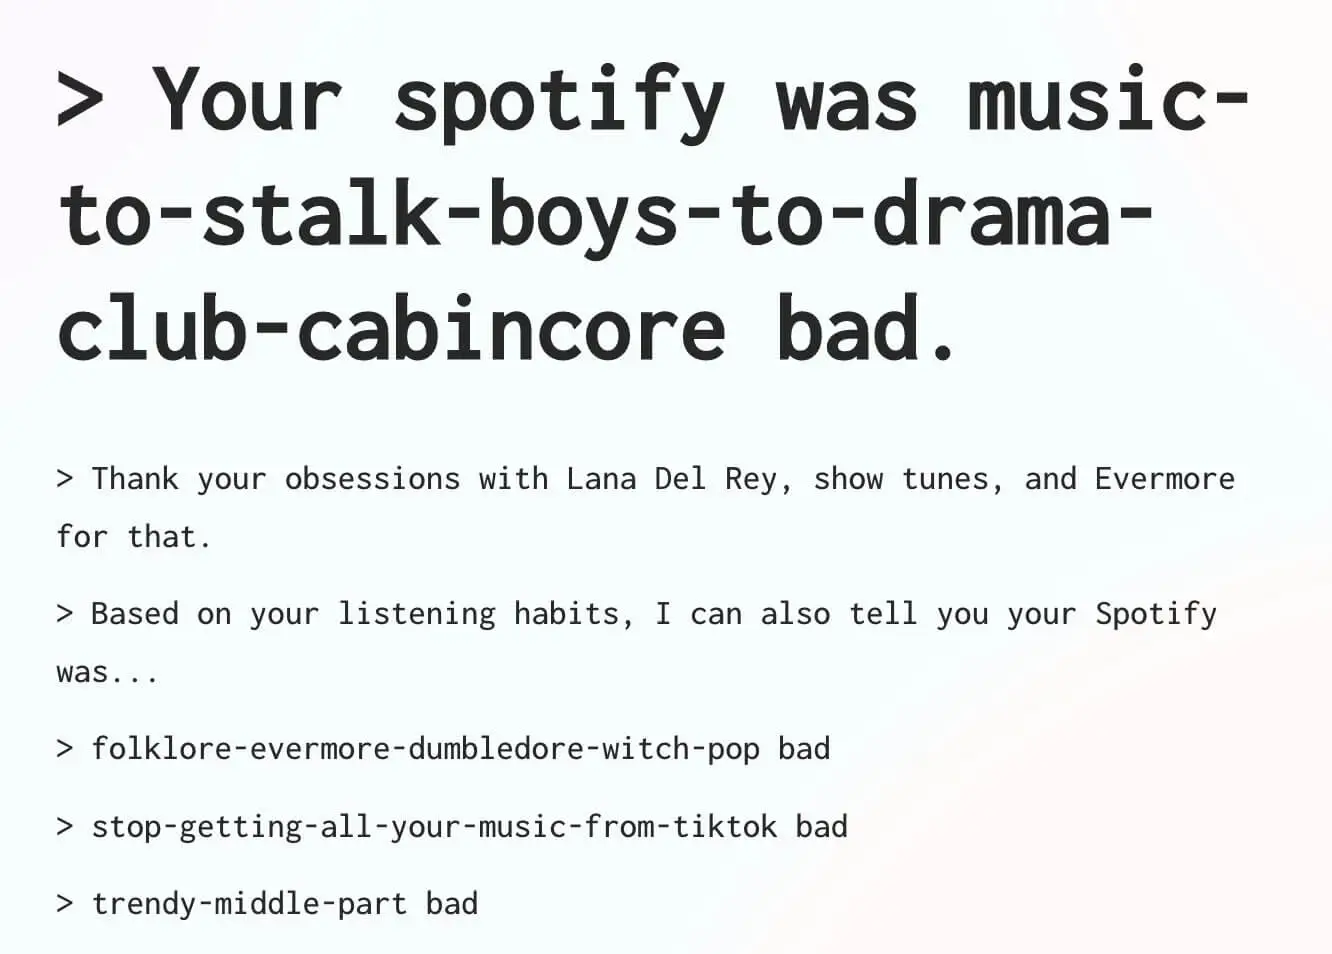 Judge my Spotify music